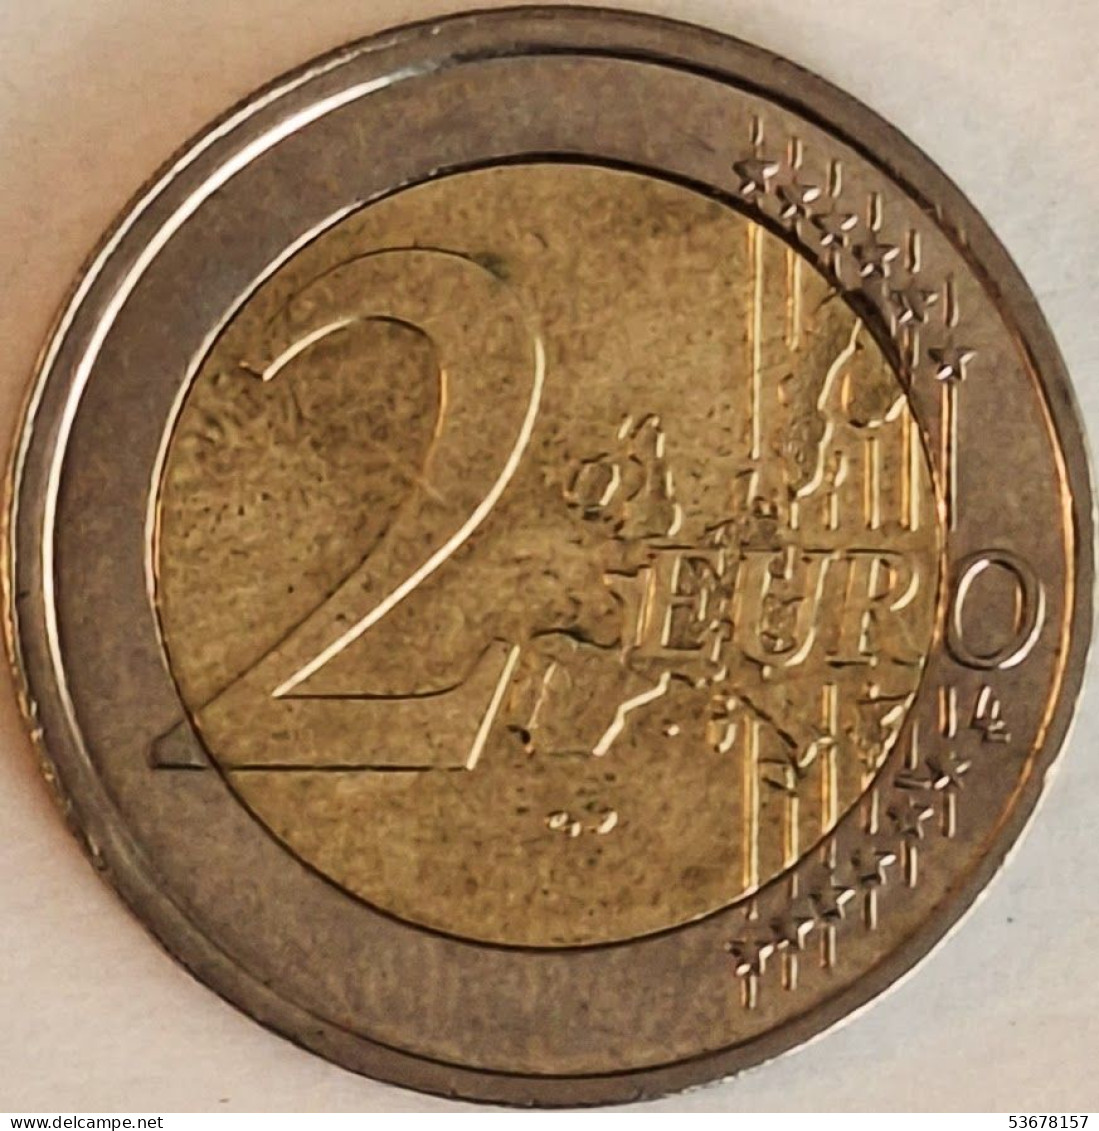 France - 2 Euro 1999, KM# 1289 (#4406) - France